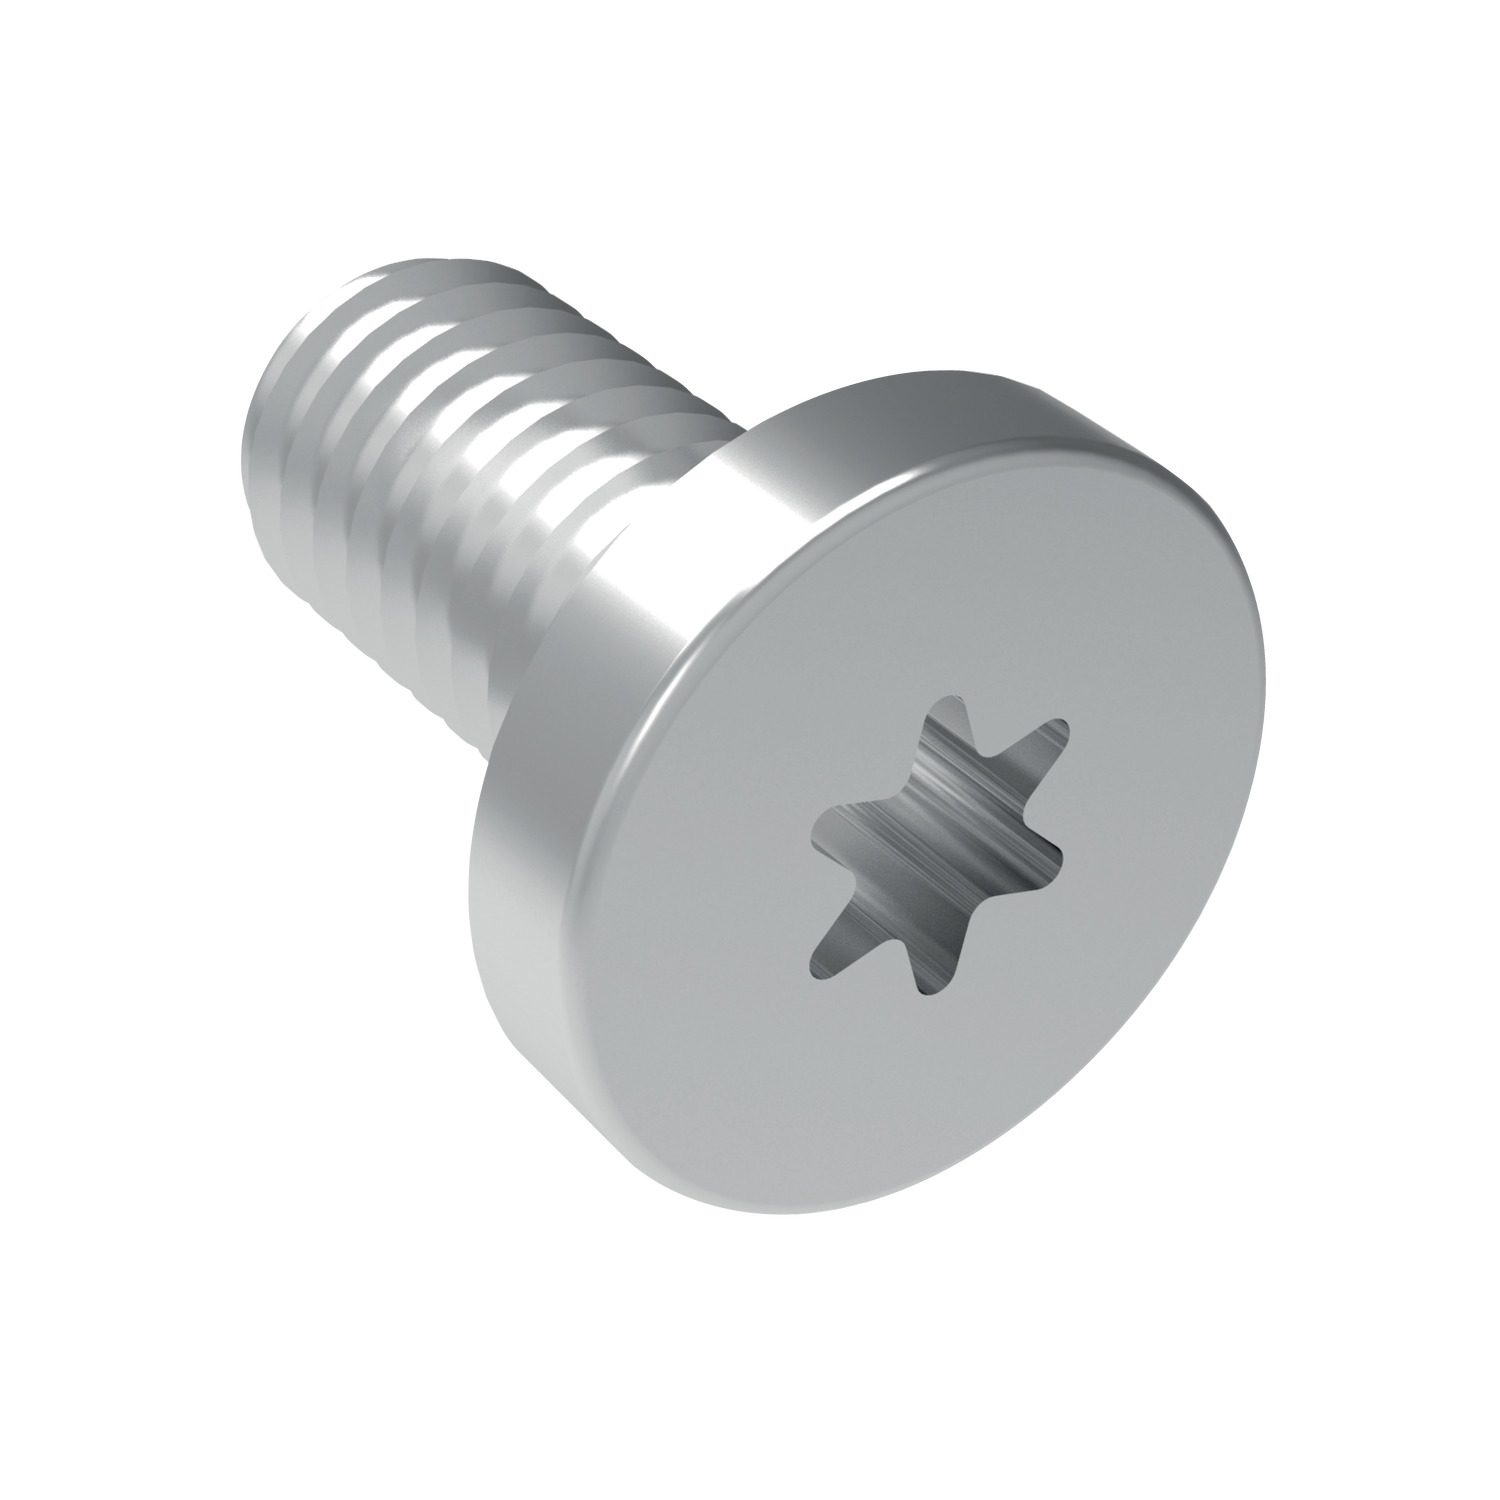 L1971.S - Fixing screws